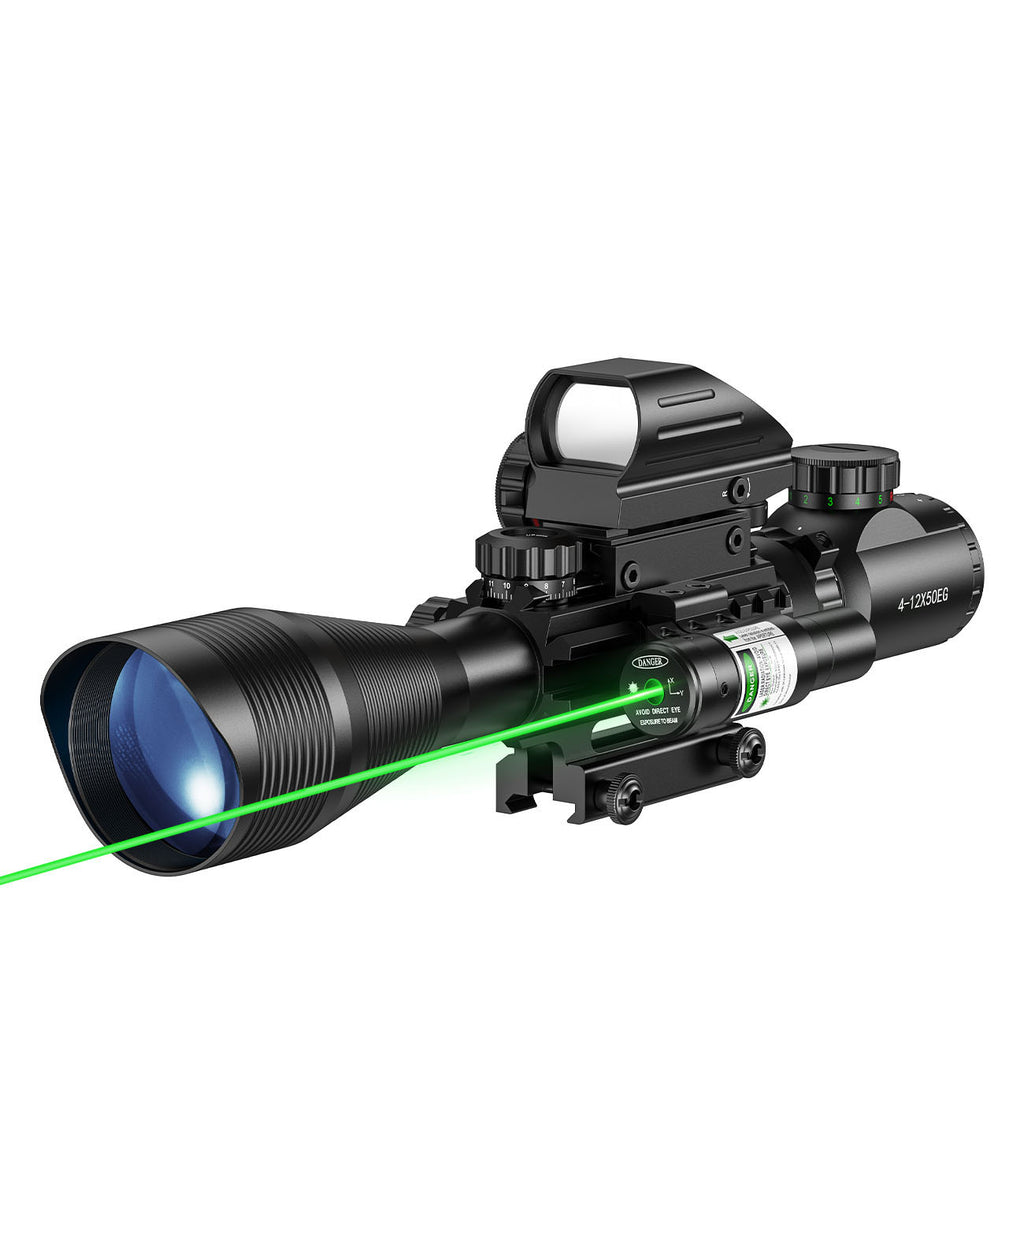 RefractR BLS™ Bowfishing Laser Sight - 5mW Green Laser